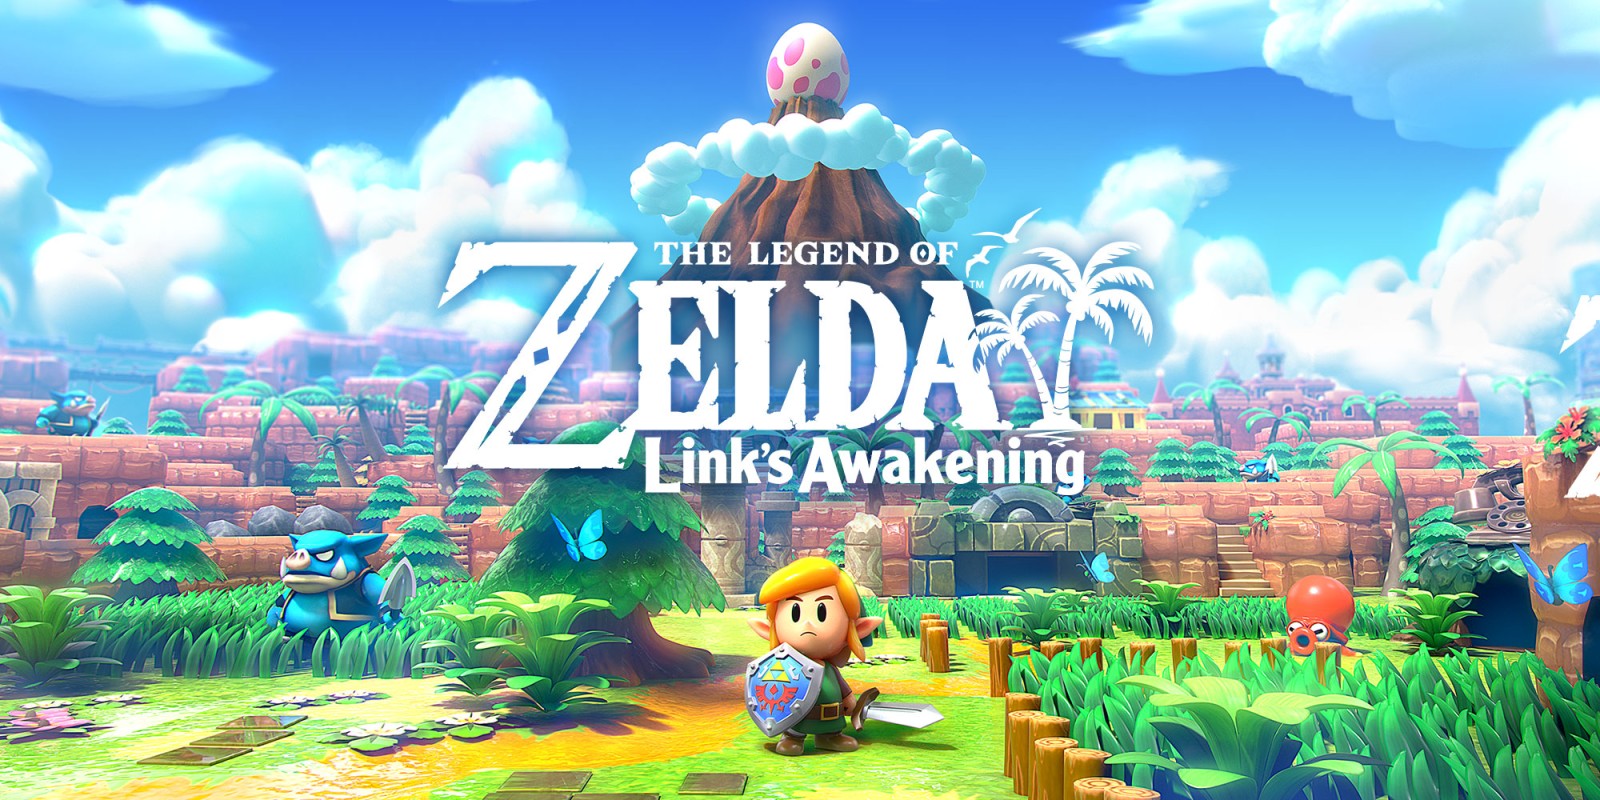 The Legend Of Zelda: Link's Awakening - Fishing Pond Unlockables Guide